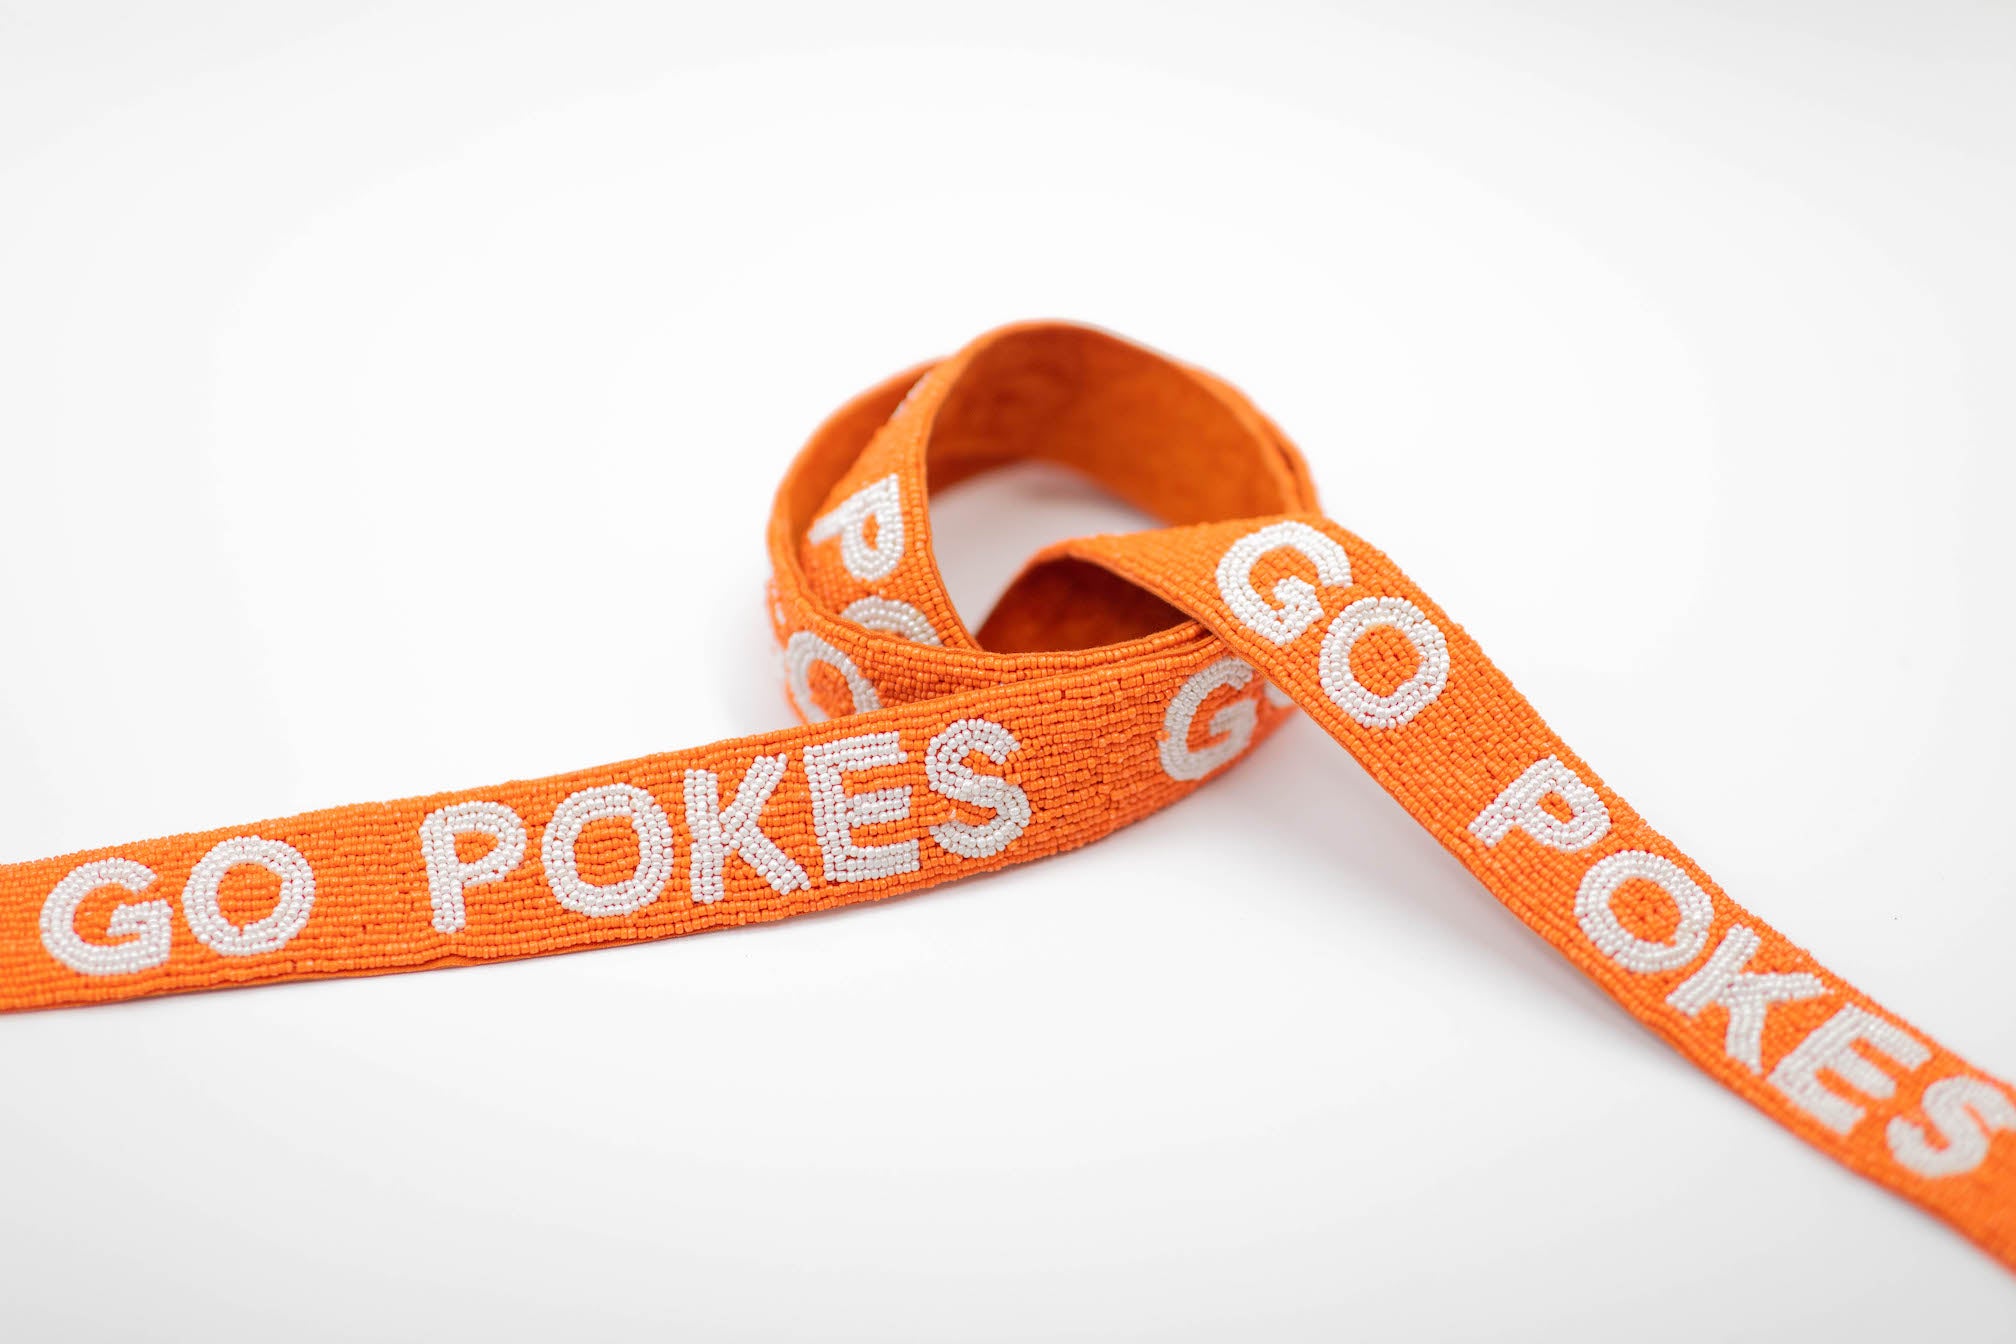 Oklahoma State Go Pokes Orange and Black Beaded Purse Strap by Desden